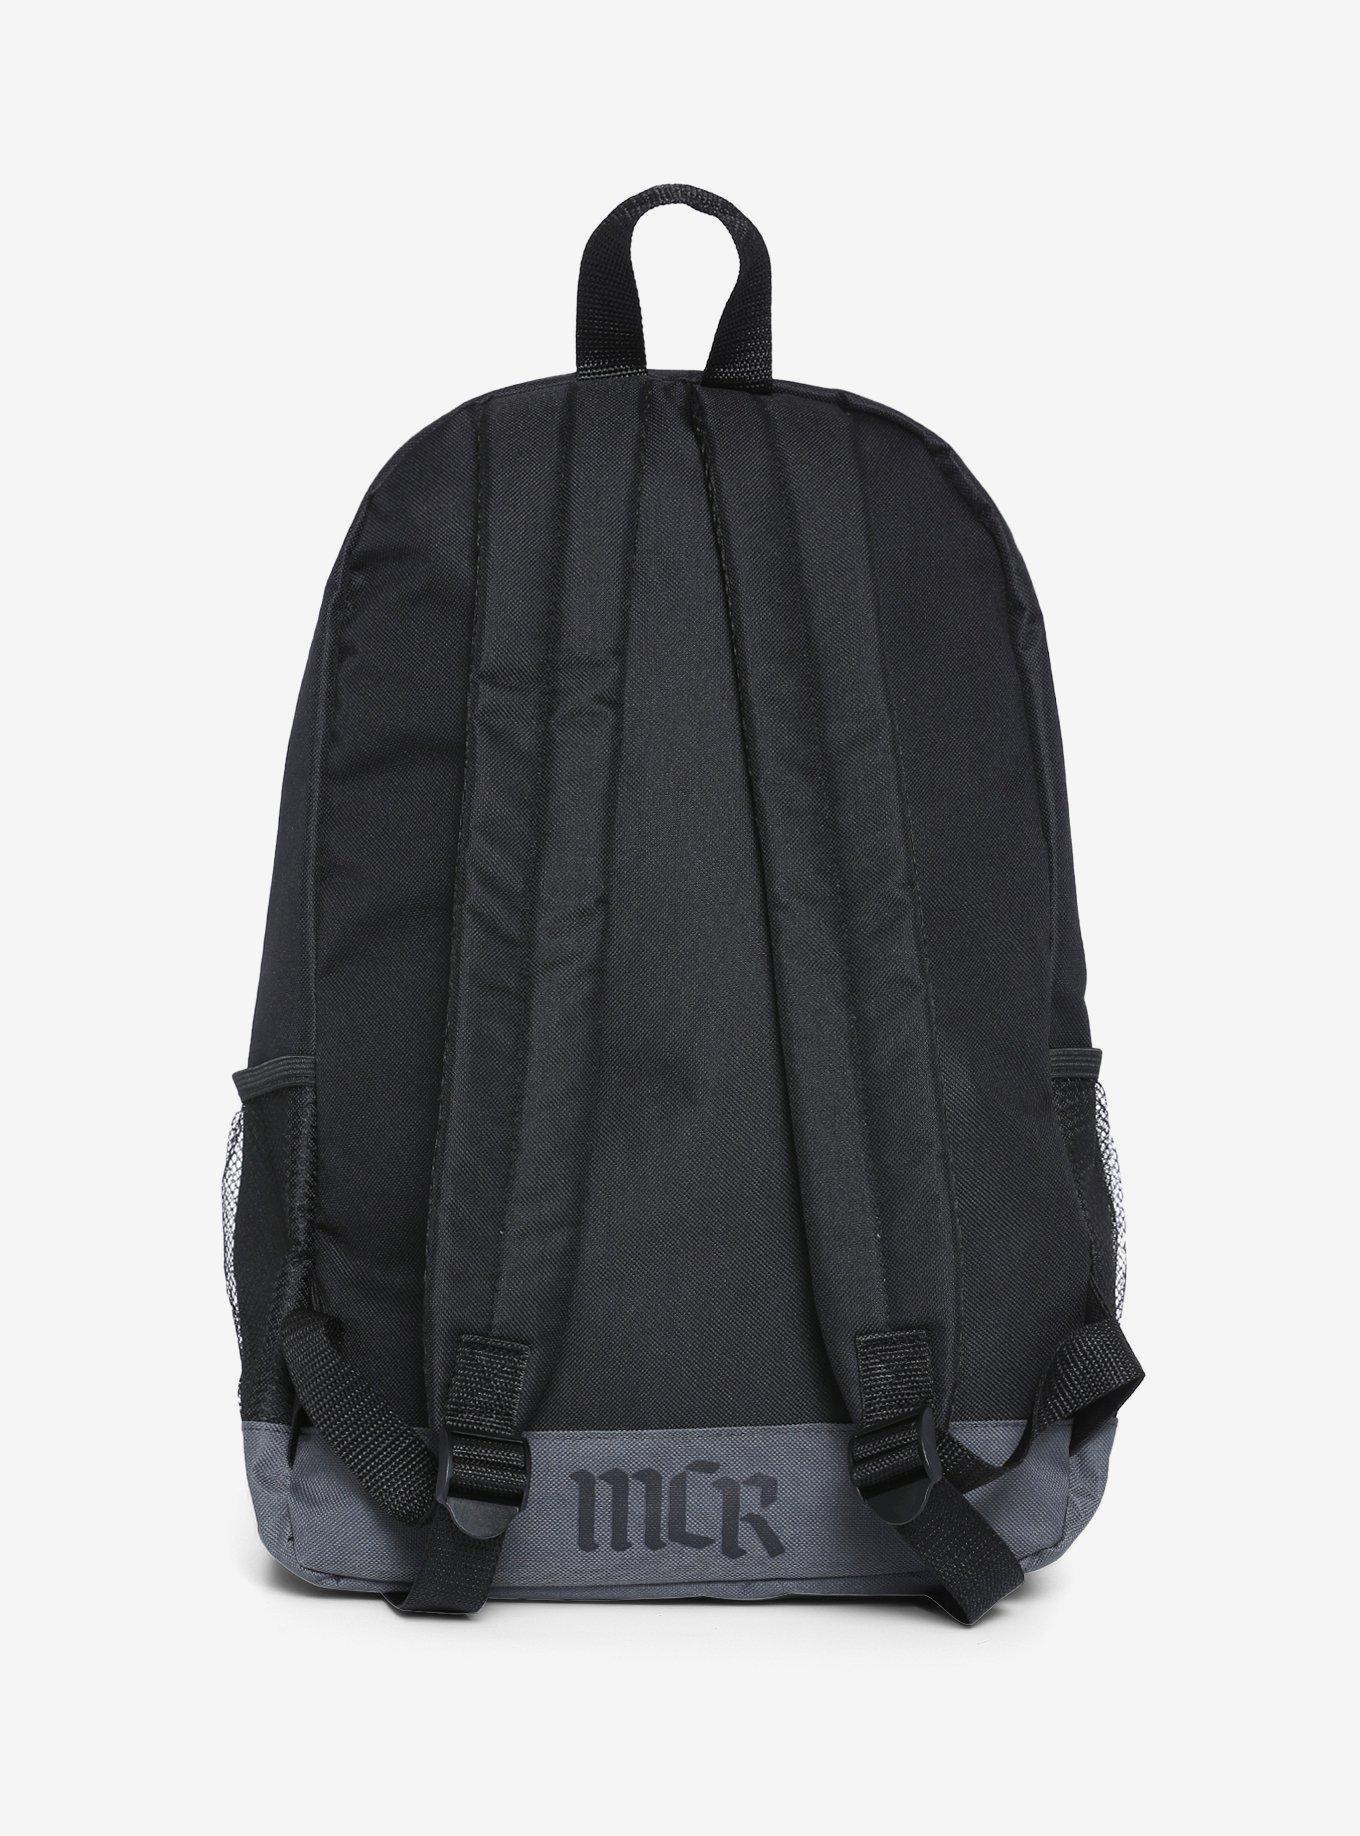 My Chemical Romance Icons & Logo Backpack, , alternate